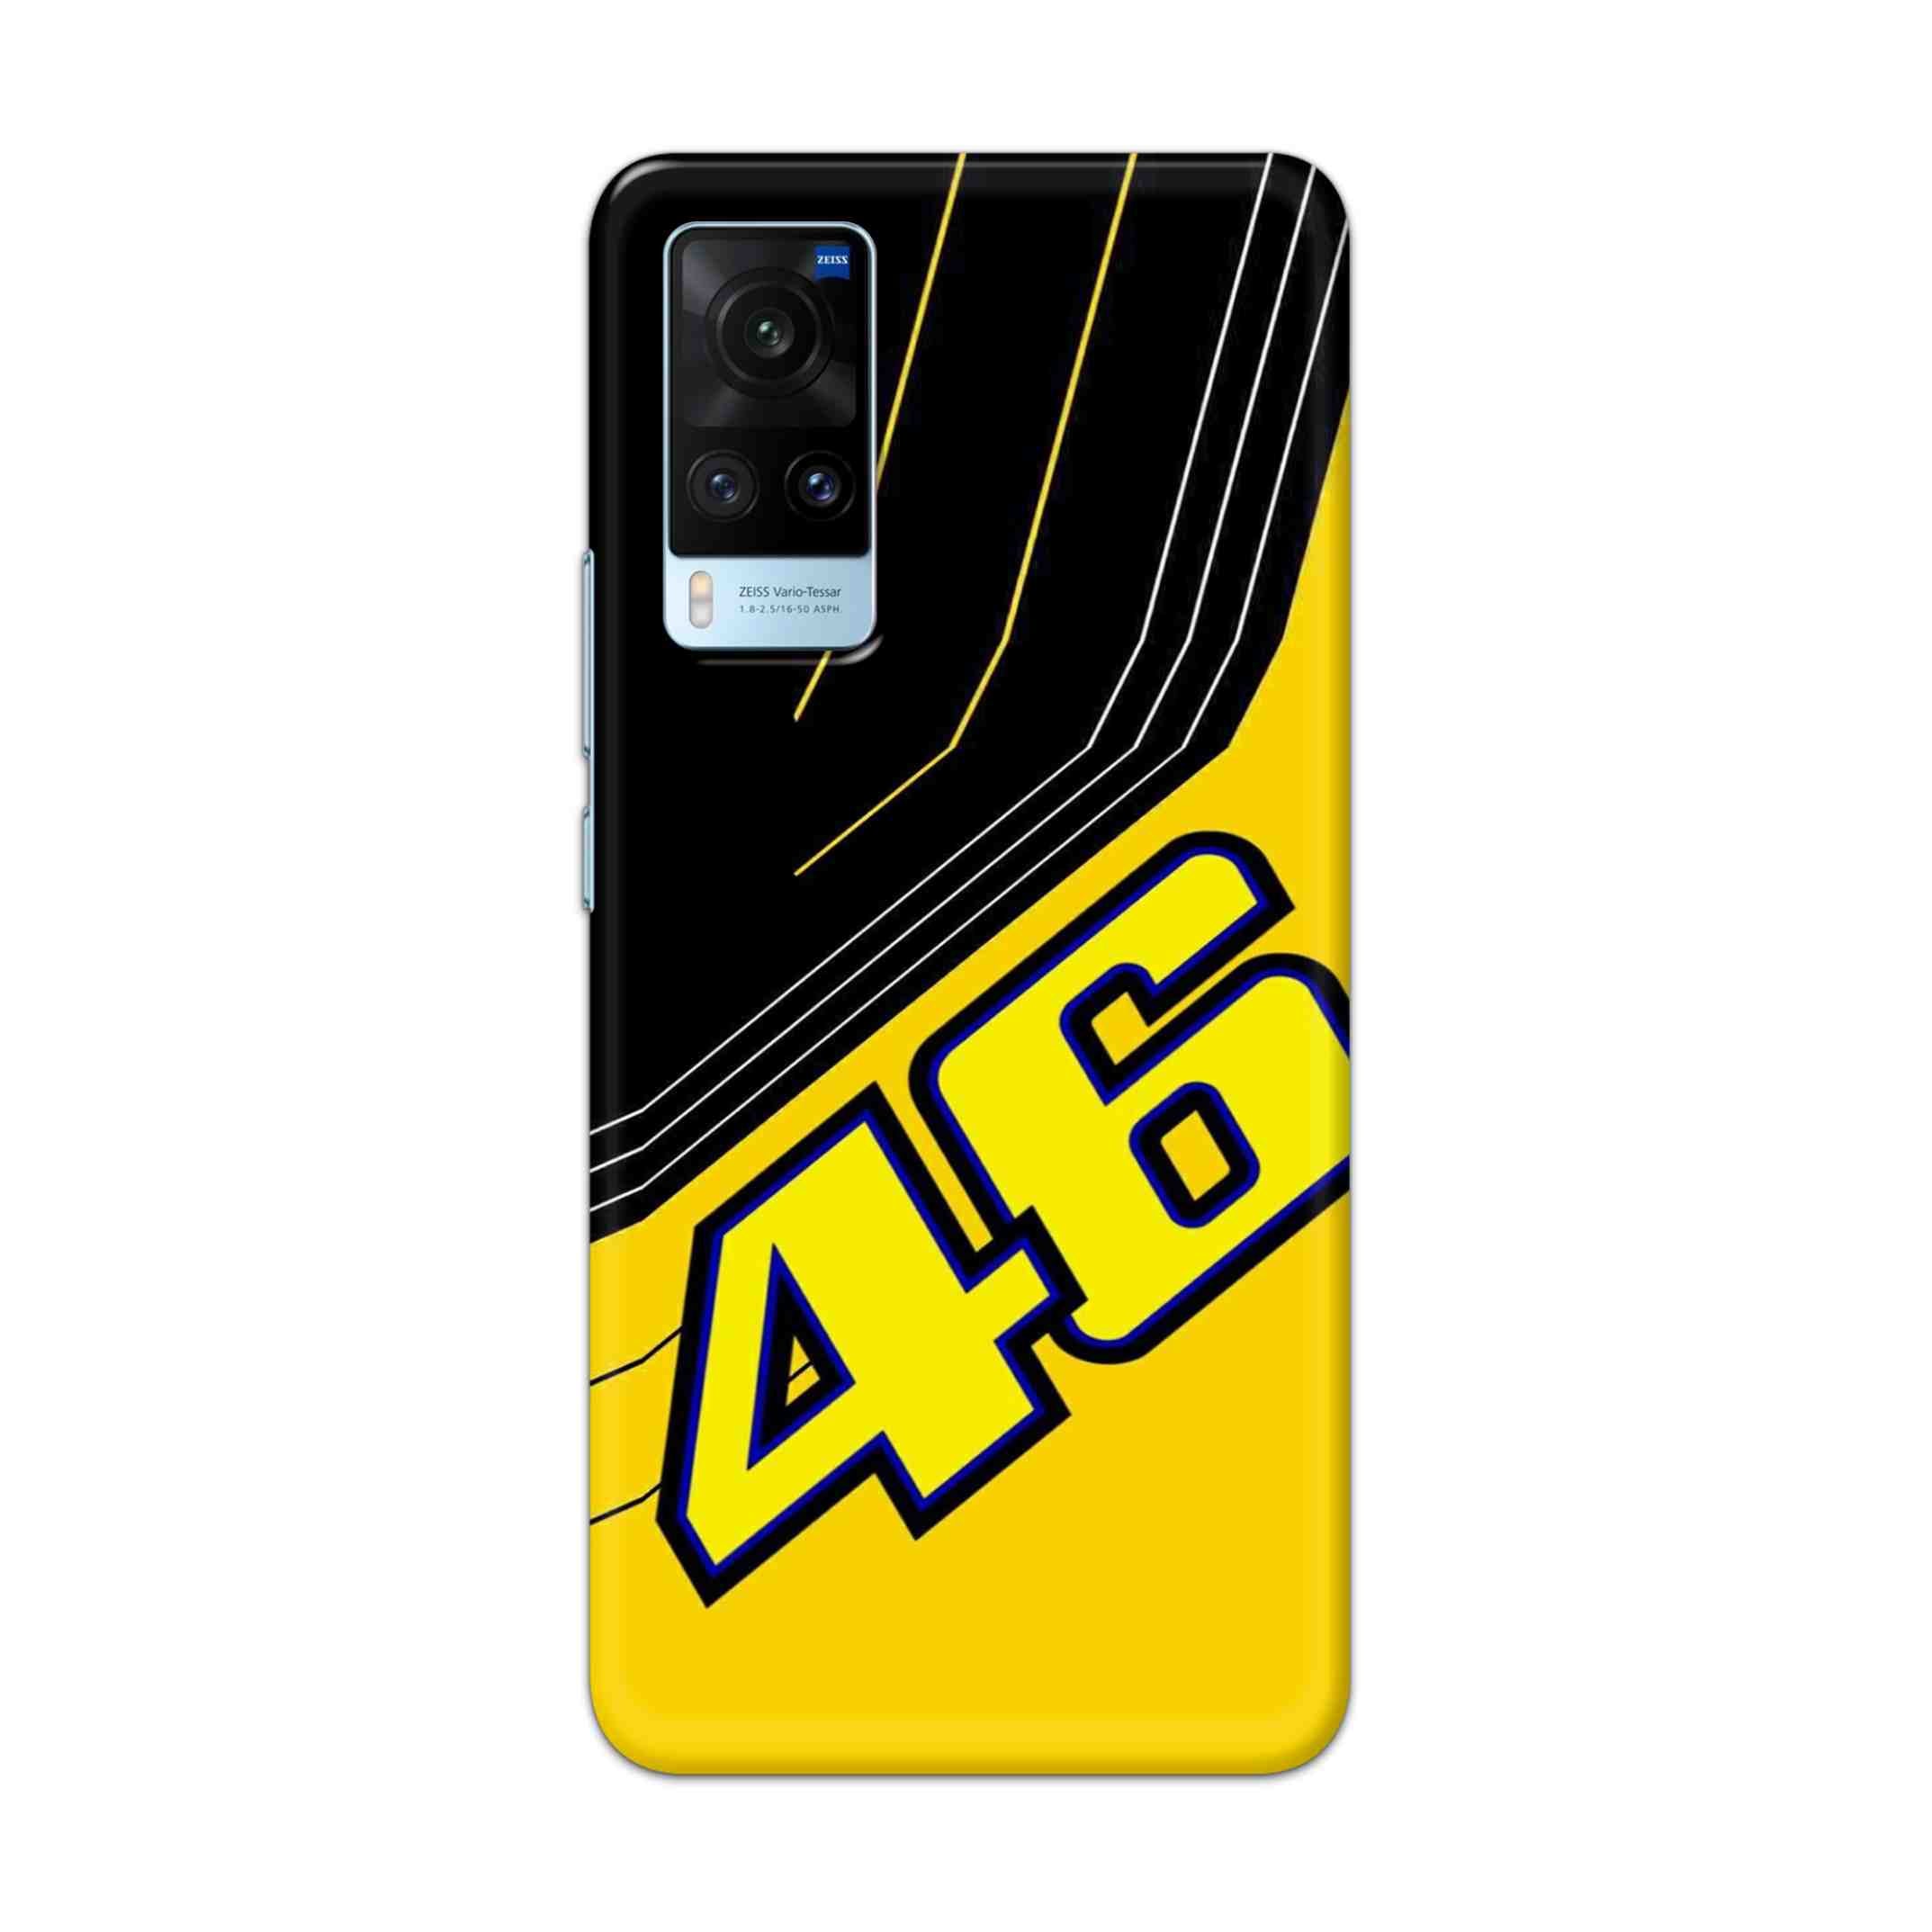 Buy 46 Hard Back Mobile Phone Case Cover For Vivo X60 Online